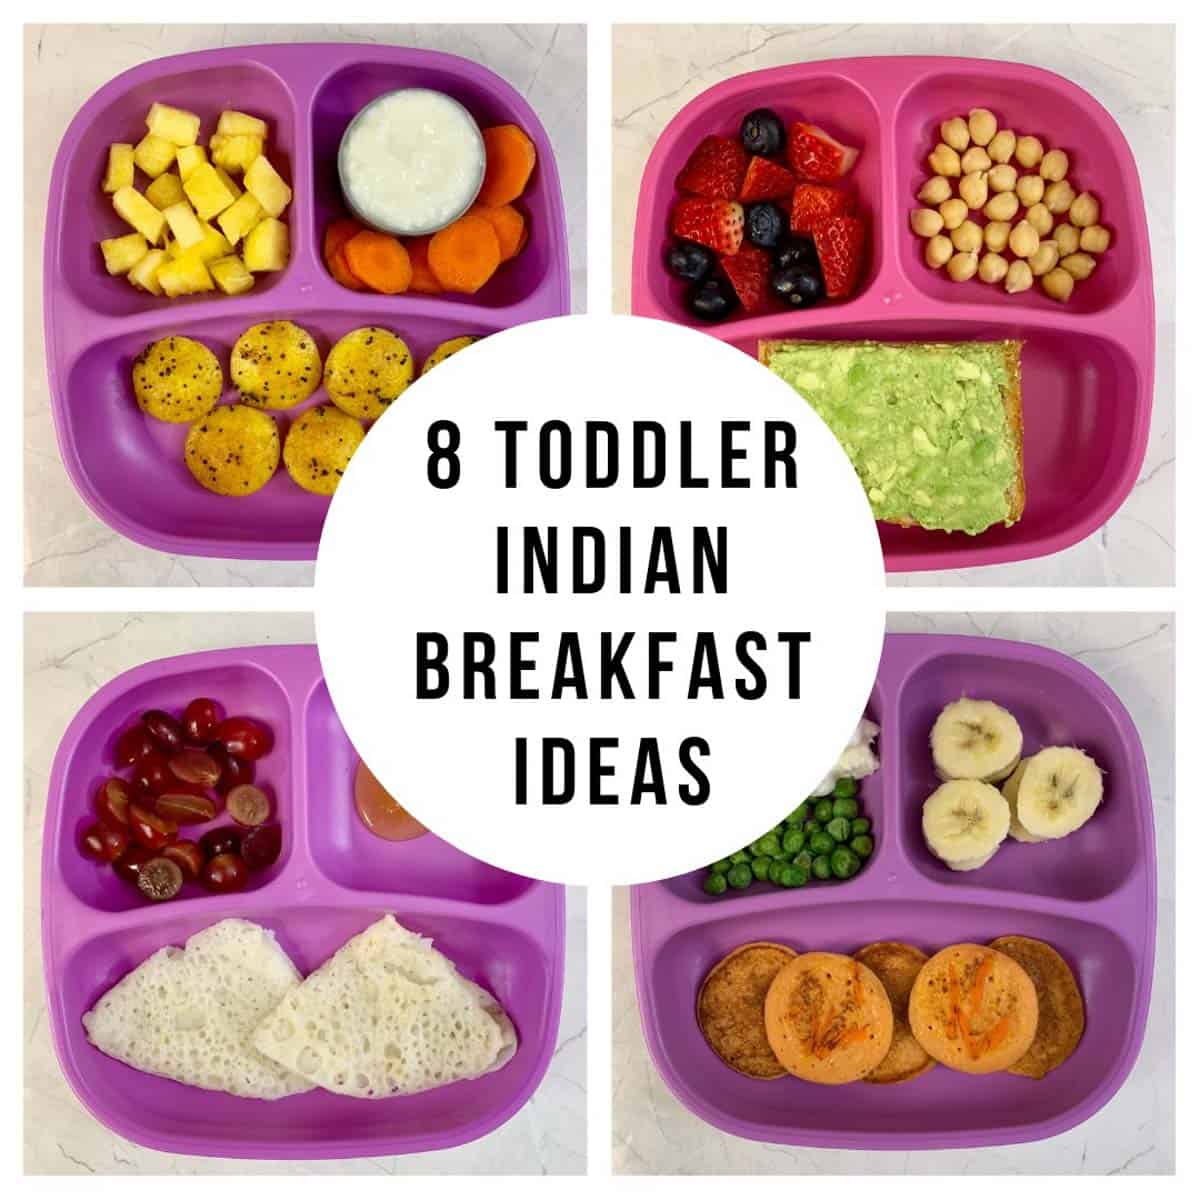 https://www.indianveggiedelight.com/wp-content/uploads/2019/07/toddler-breakfast-ideas-featured.jpg